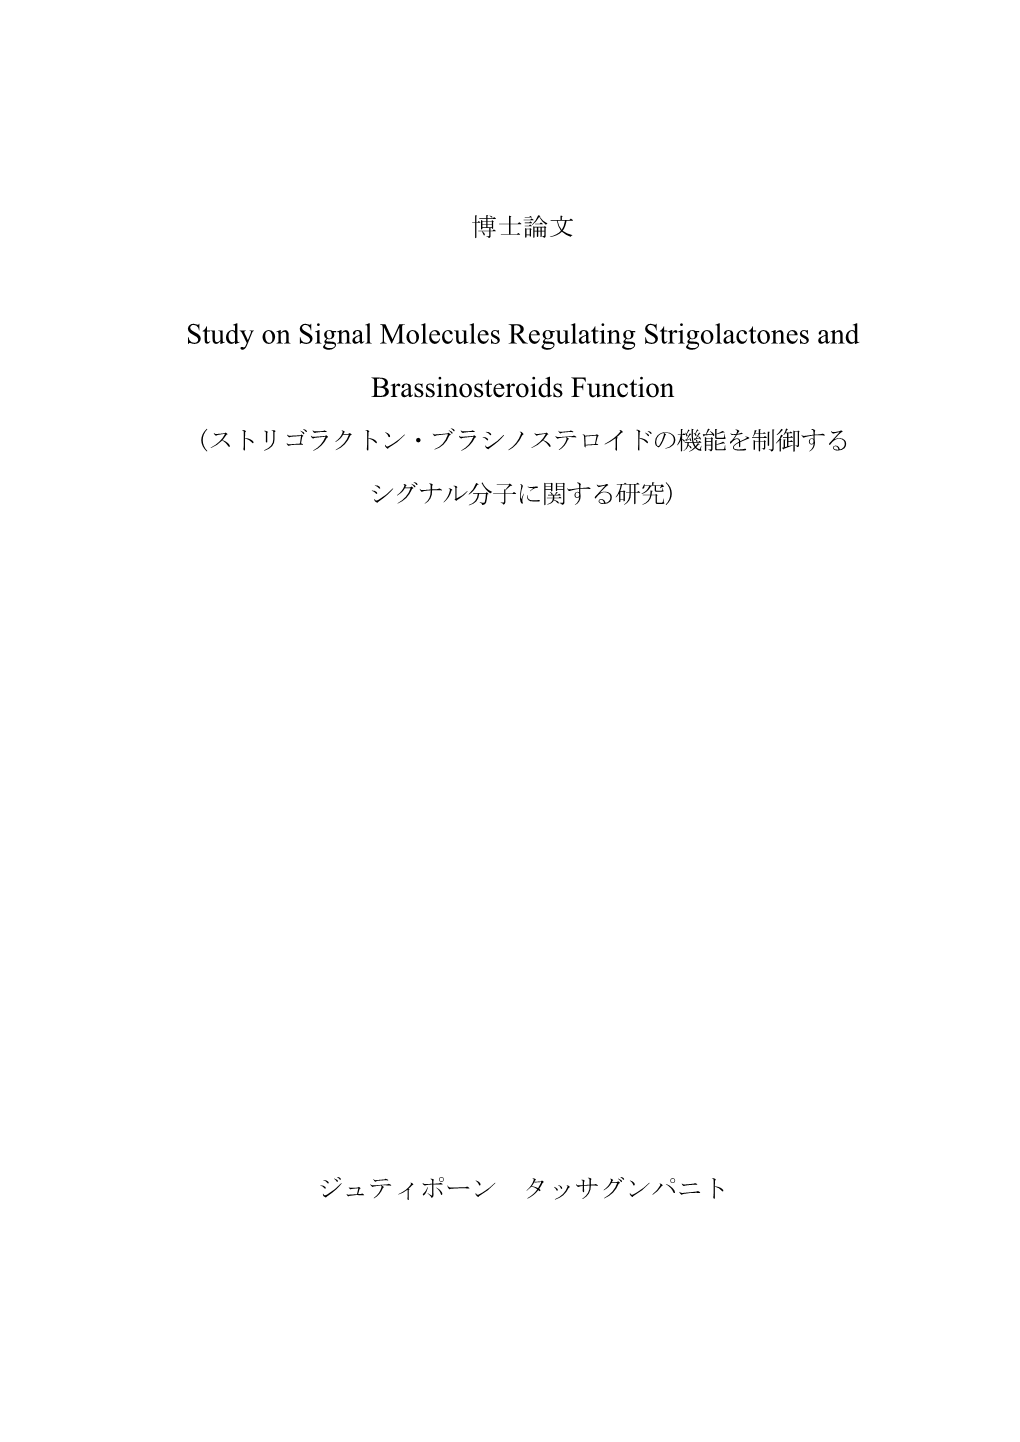 Study on Signal Molecules Regulating Strigolactones and Brassinosteroids Function (ストリゴラクトン・ブラシノステロイドの機能を制御する